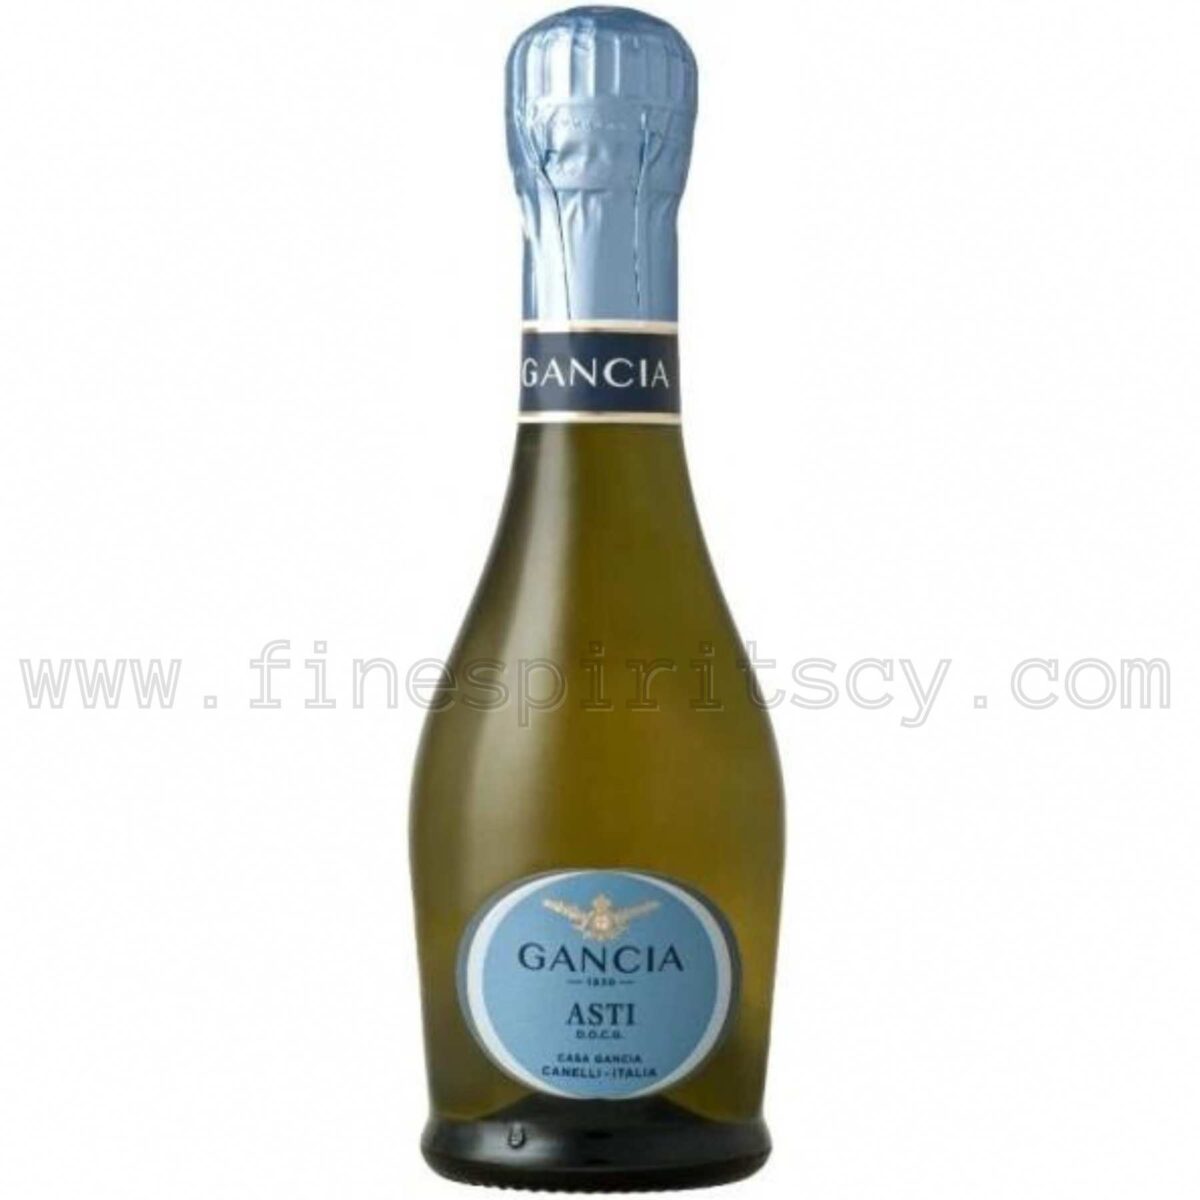 Gancia ASTI DOCG 200ml 20cl 0.2l price wine cyprus online order shop buy